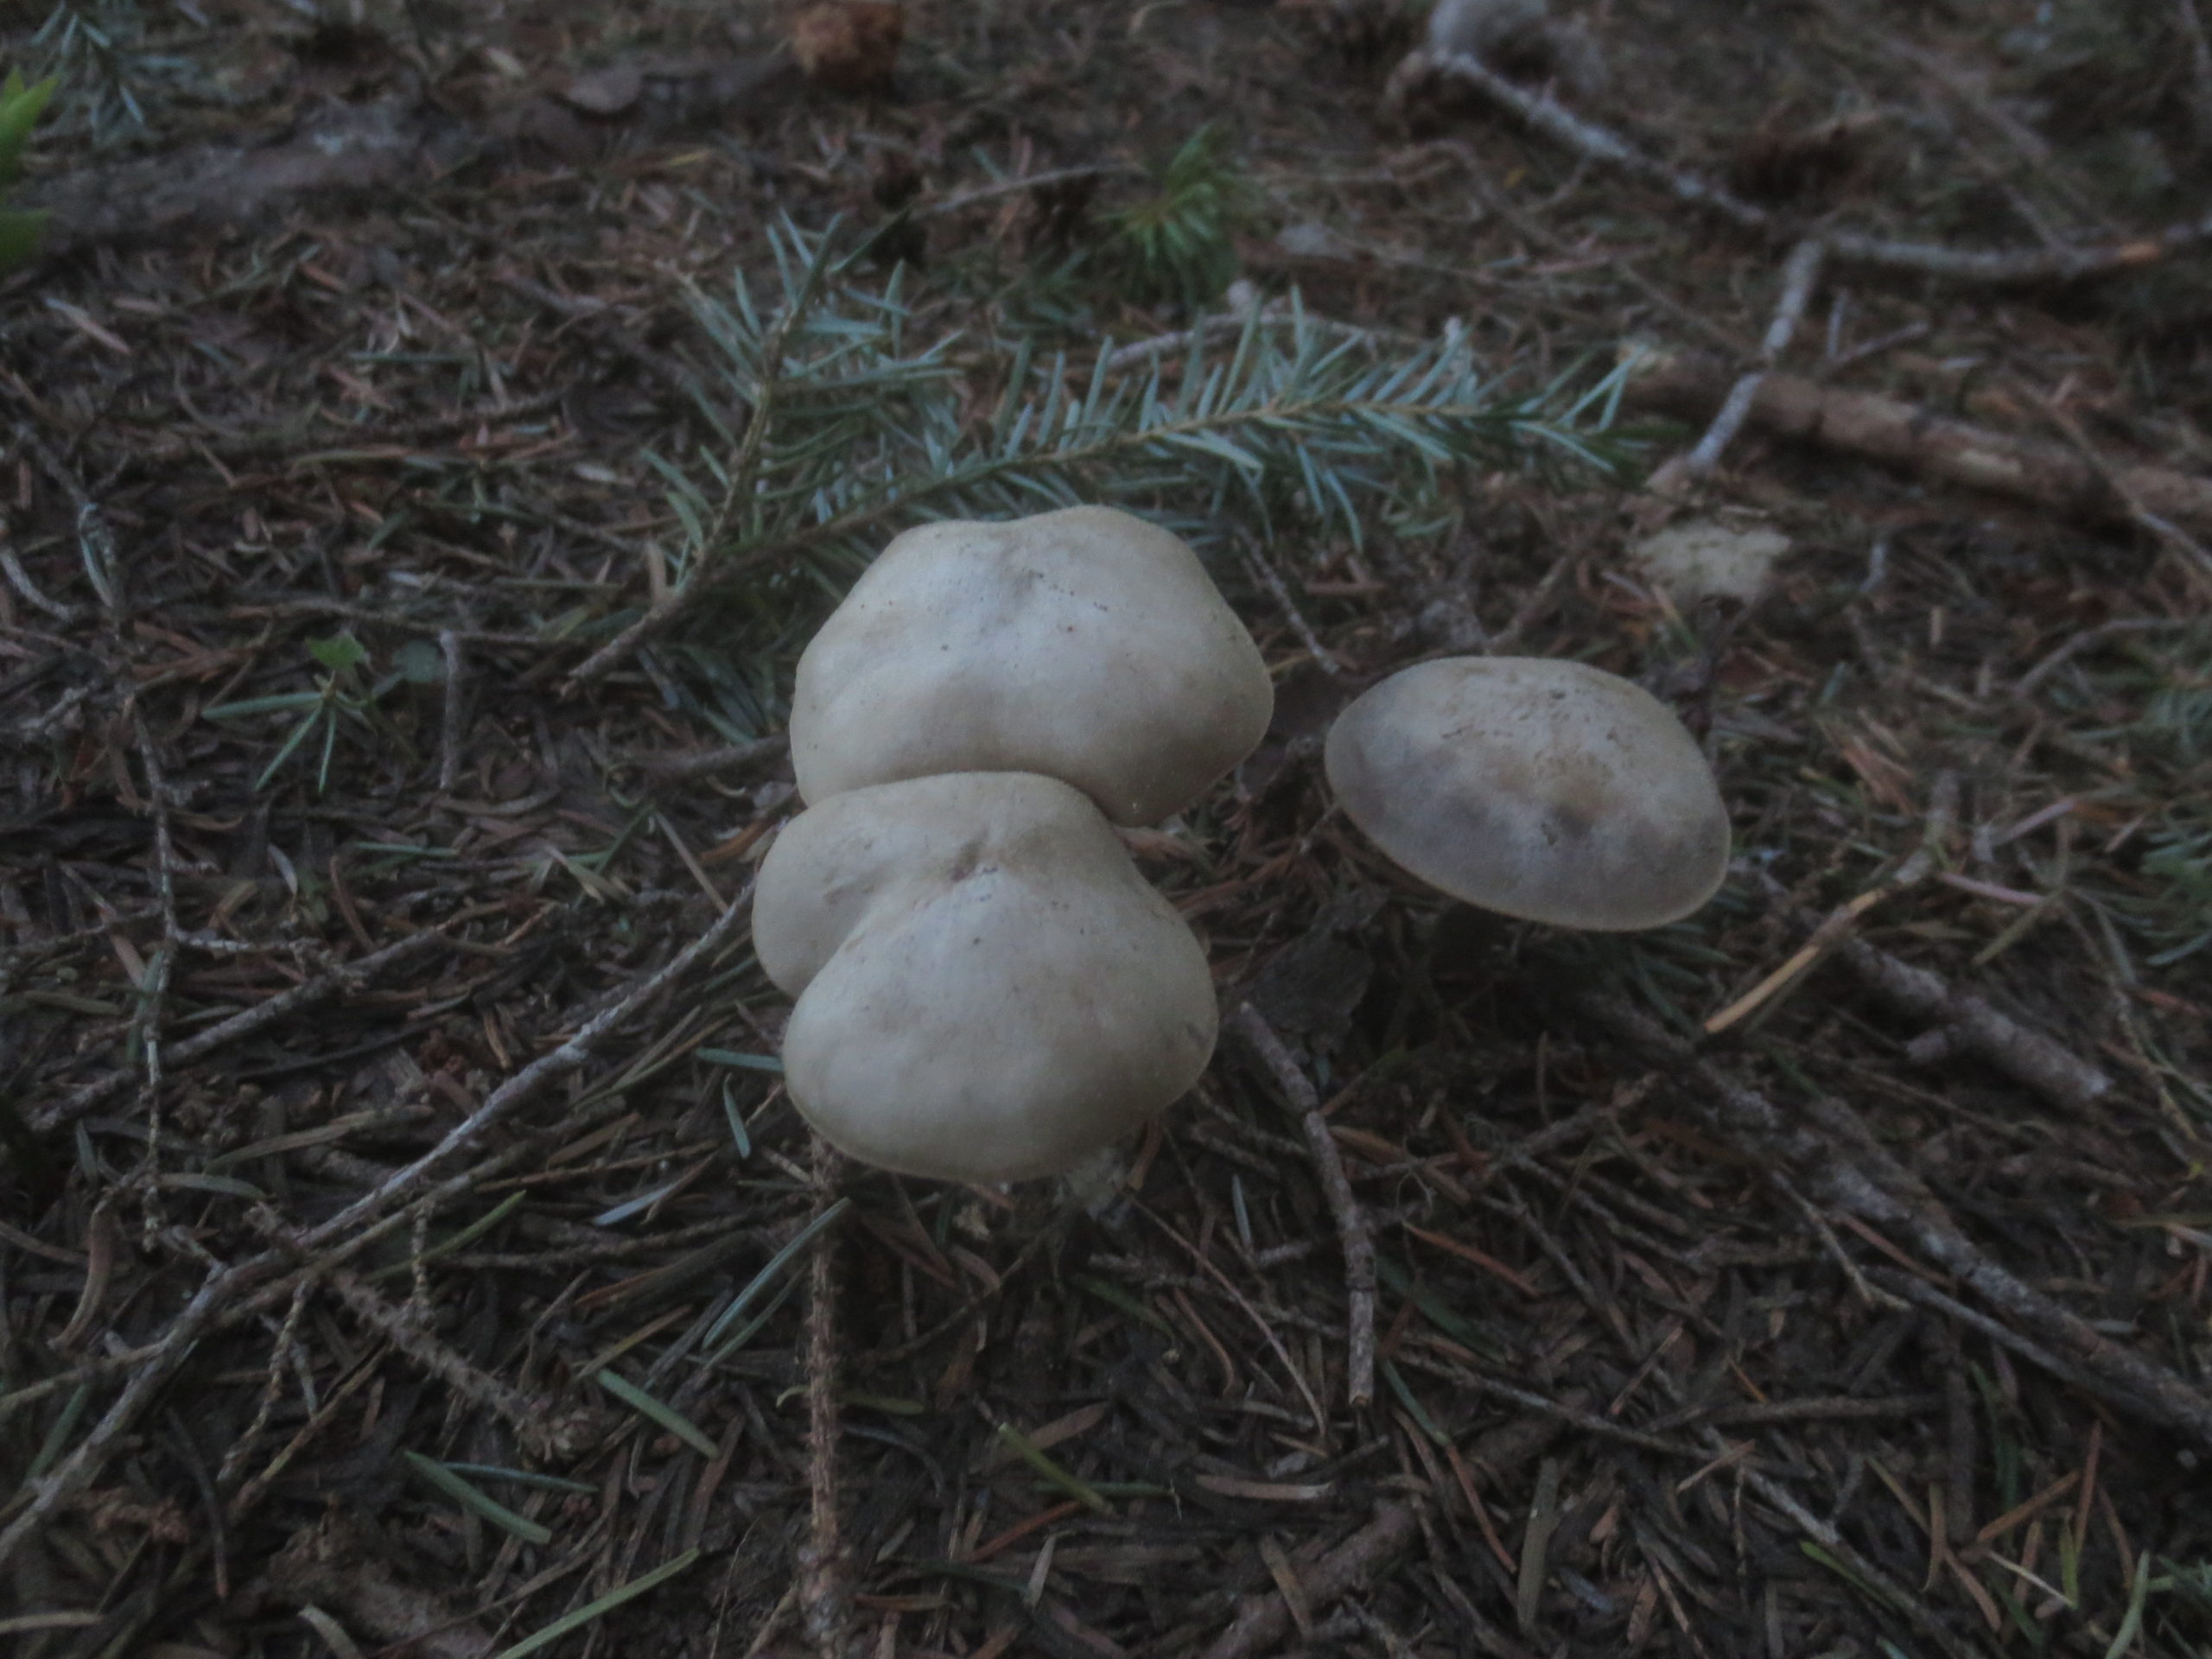 mushrooms growing on forest floor